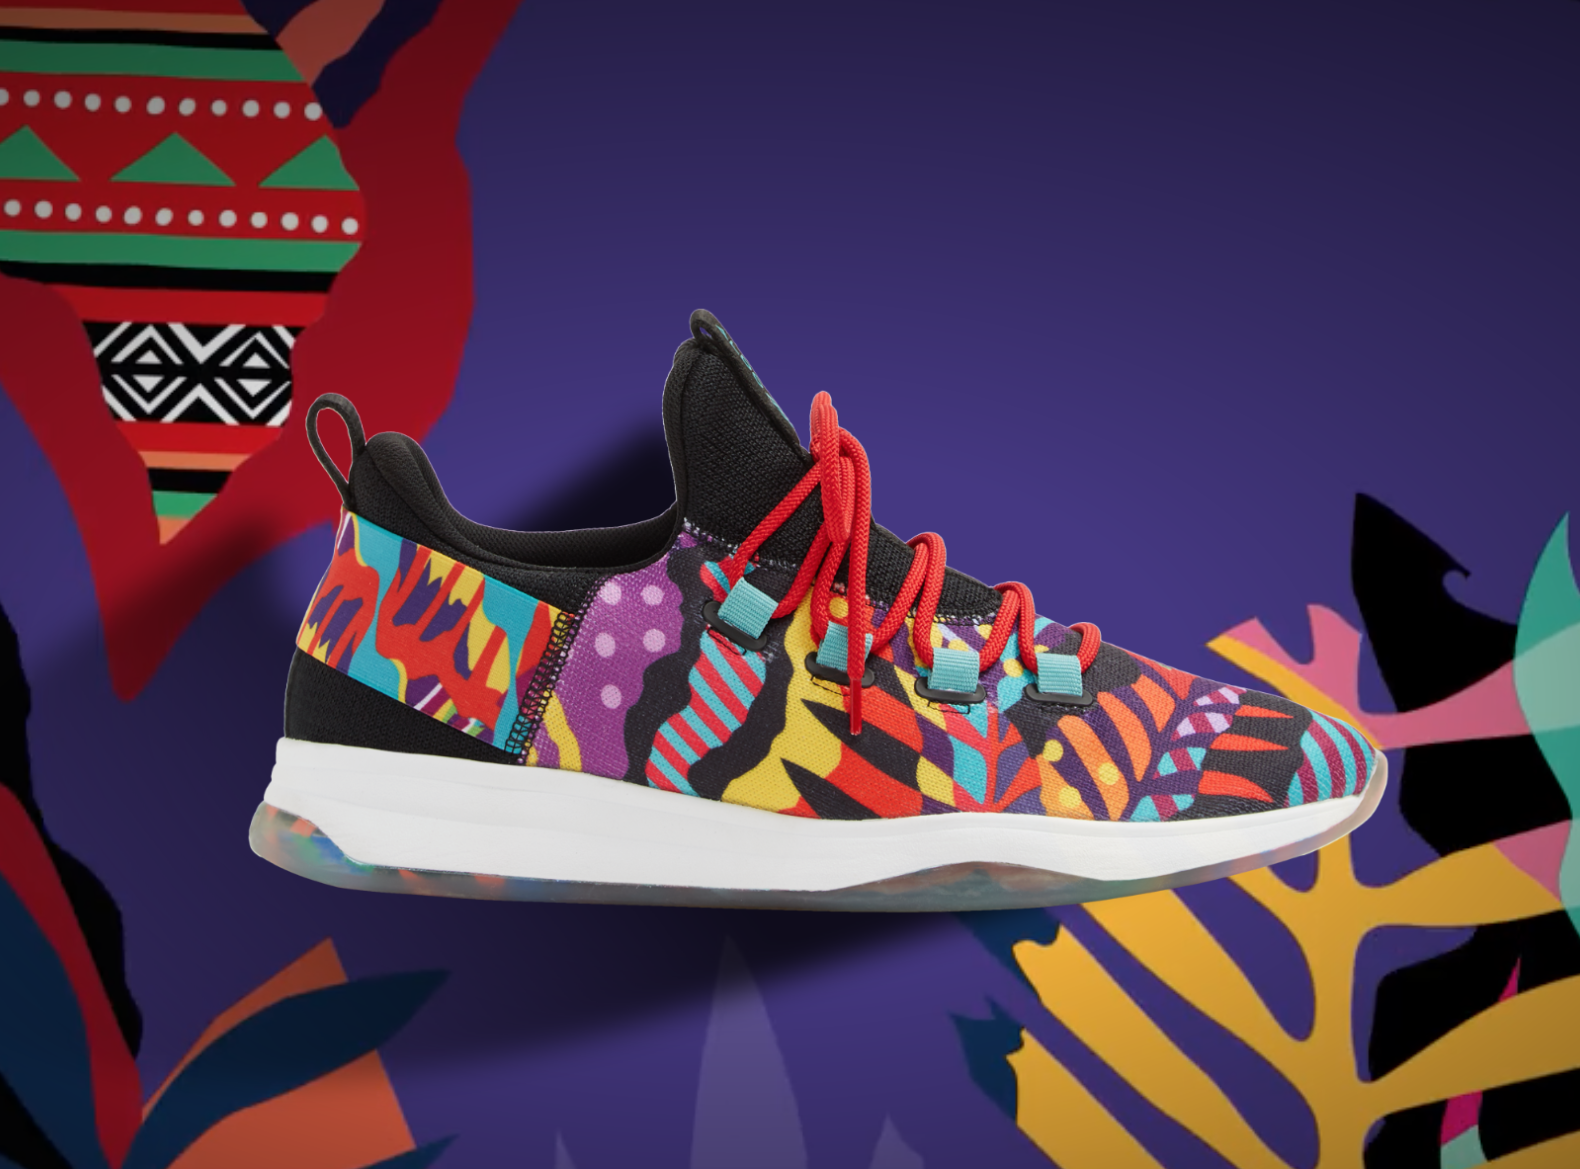 Sneakers design by Dina saadi for Aldo MX Artist Series